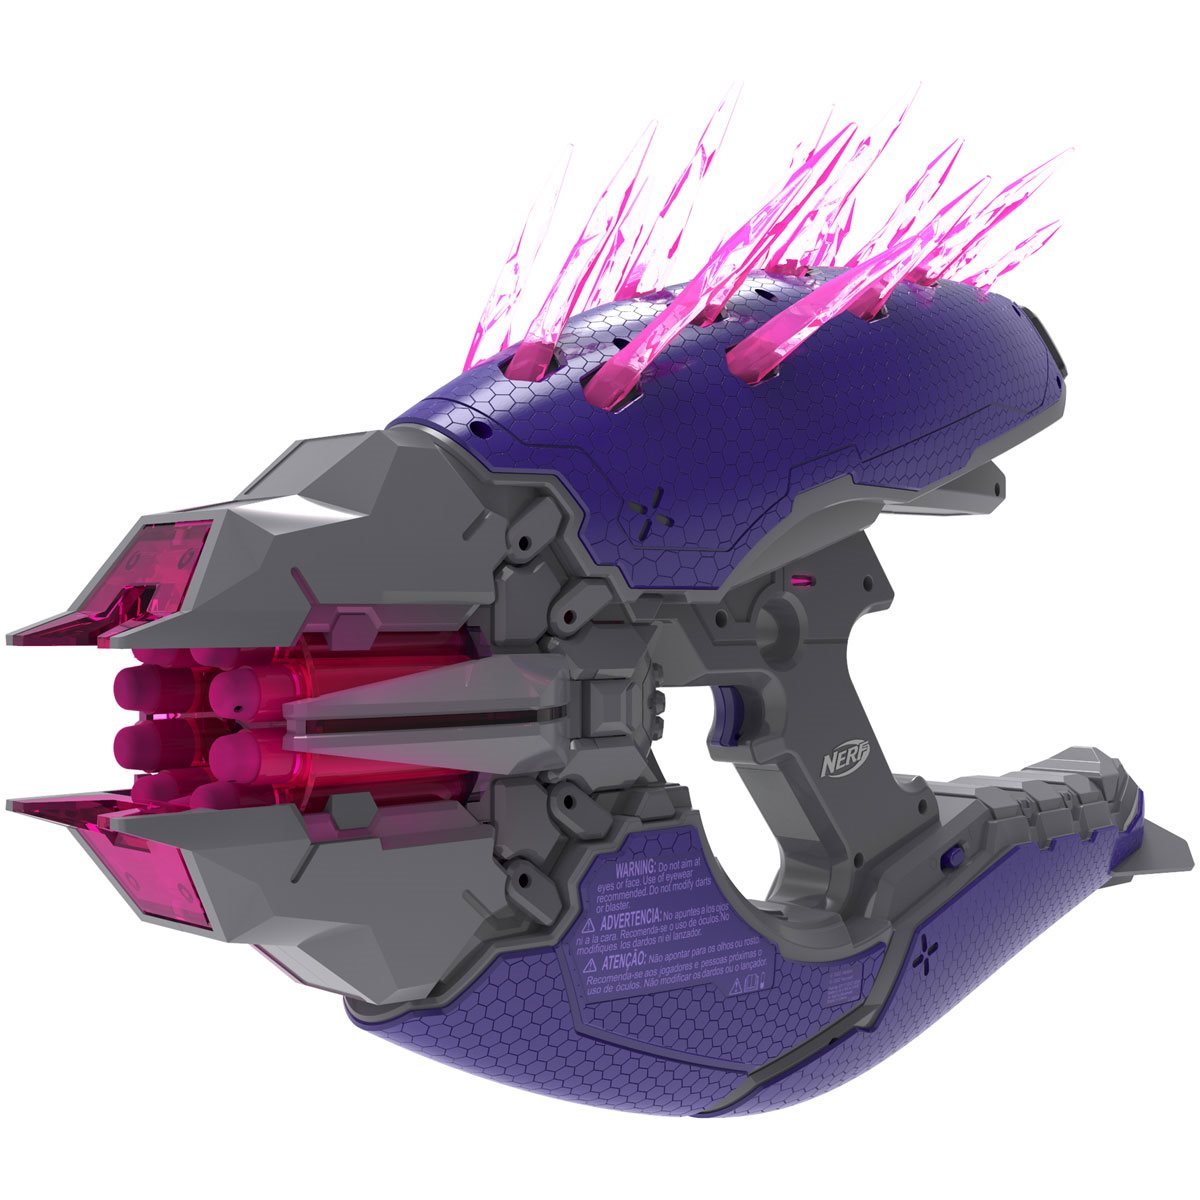 Halo Toy Needler Gun